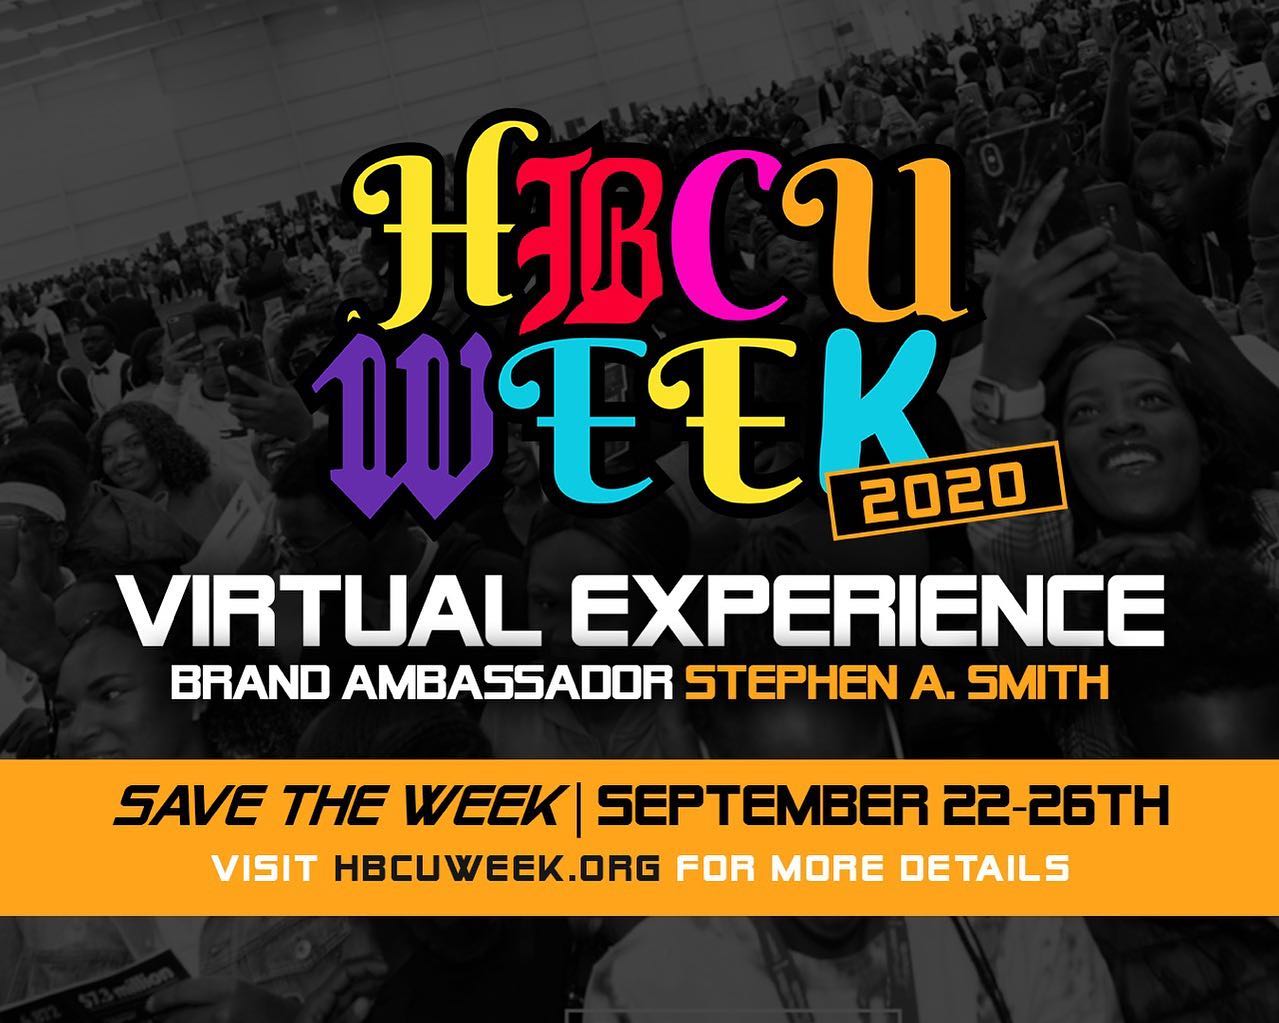 HBCU Week 2020- Visit hbcuweek.org for more details